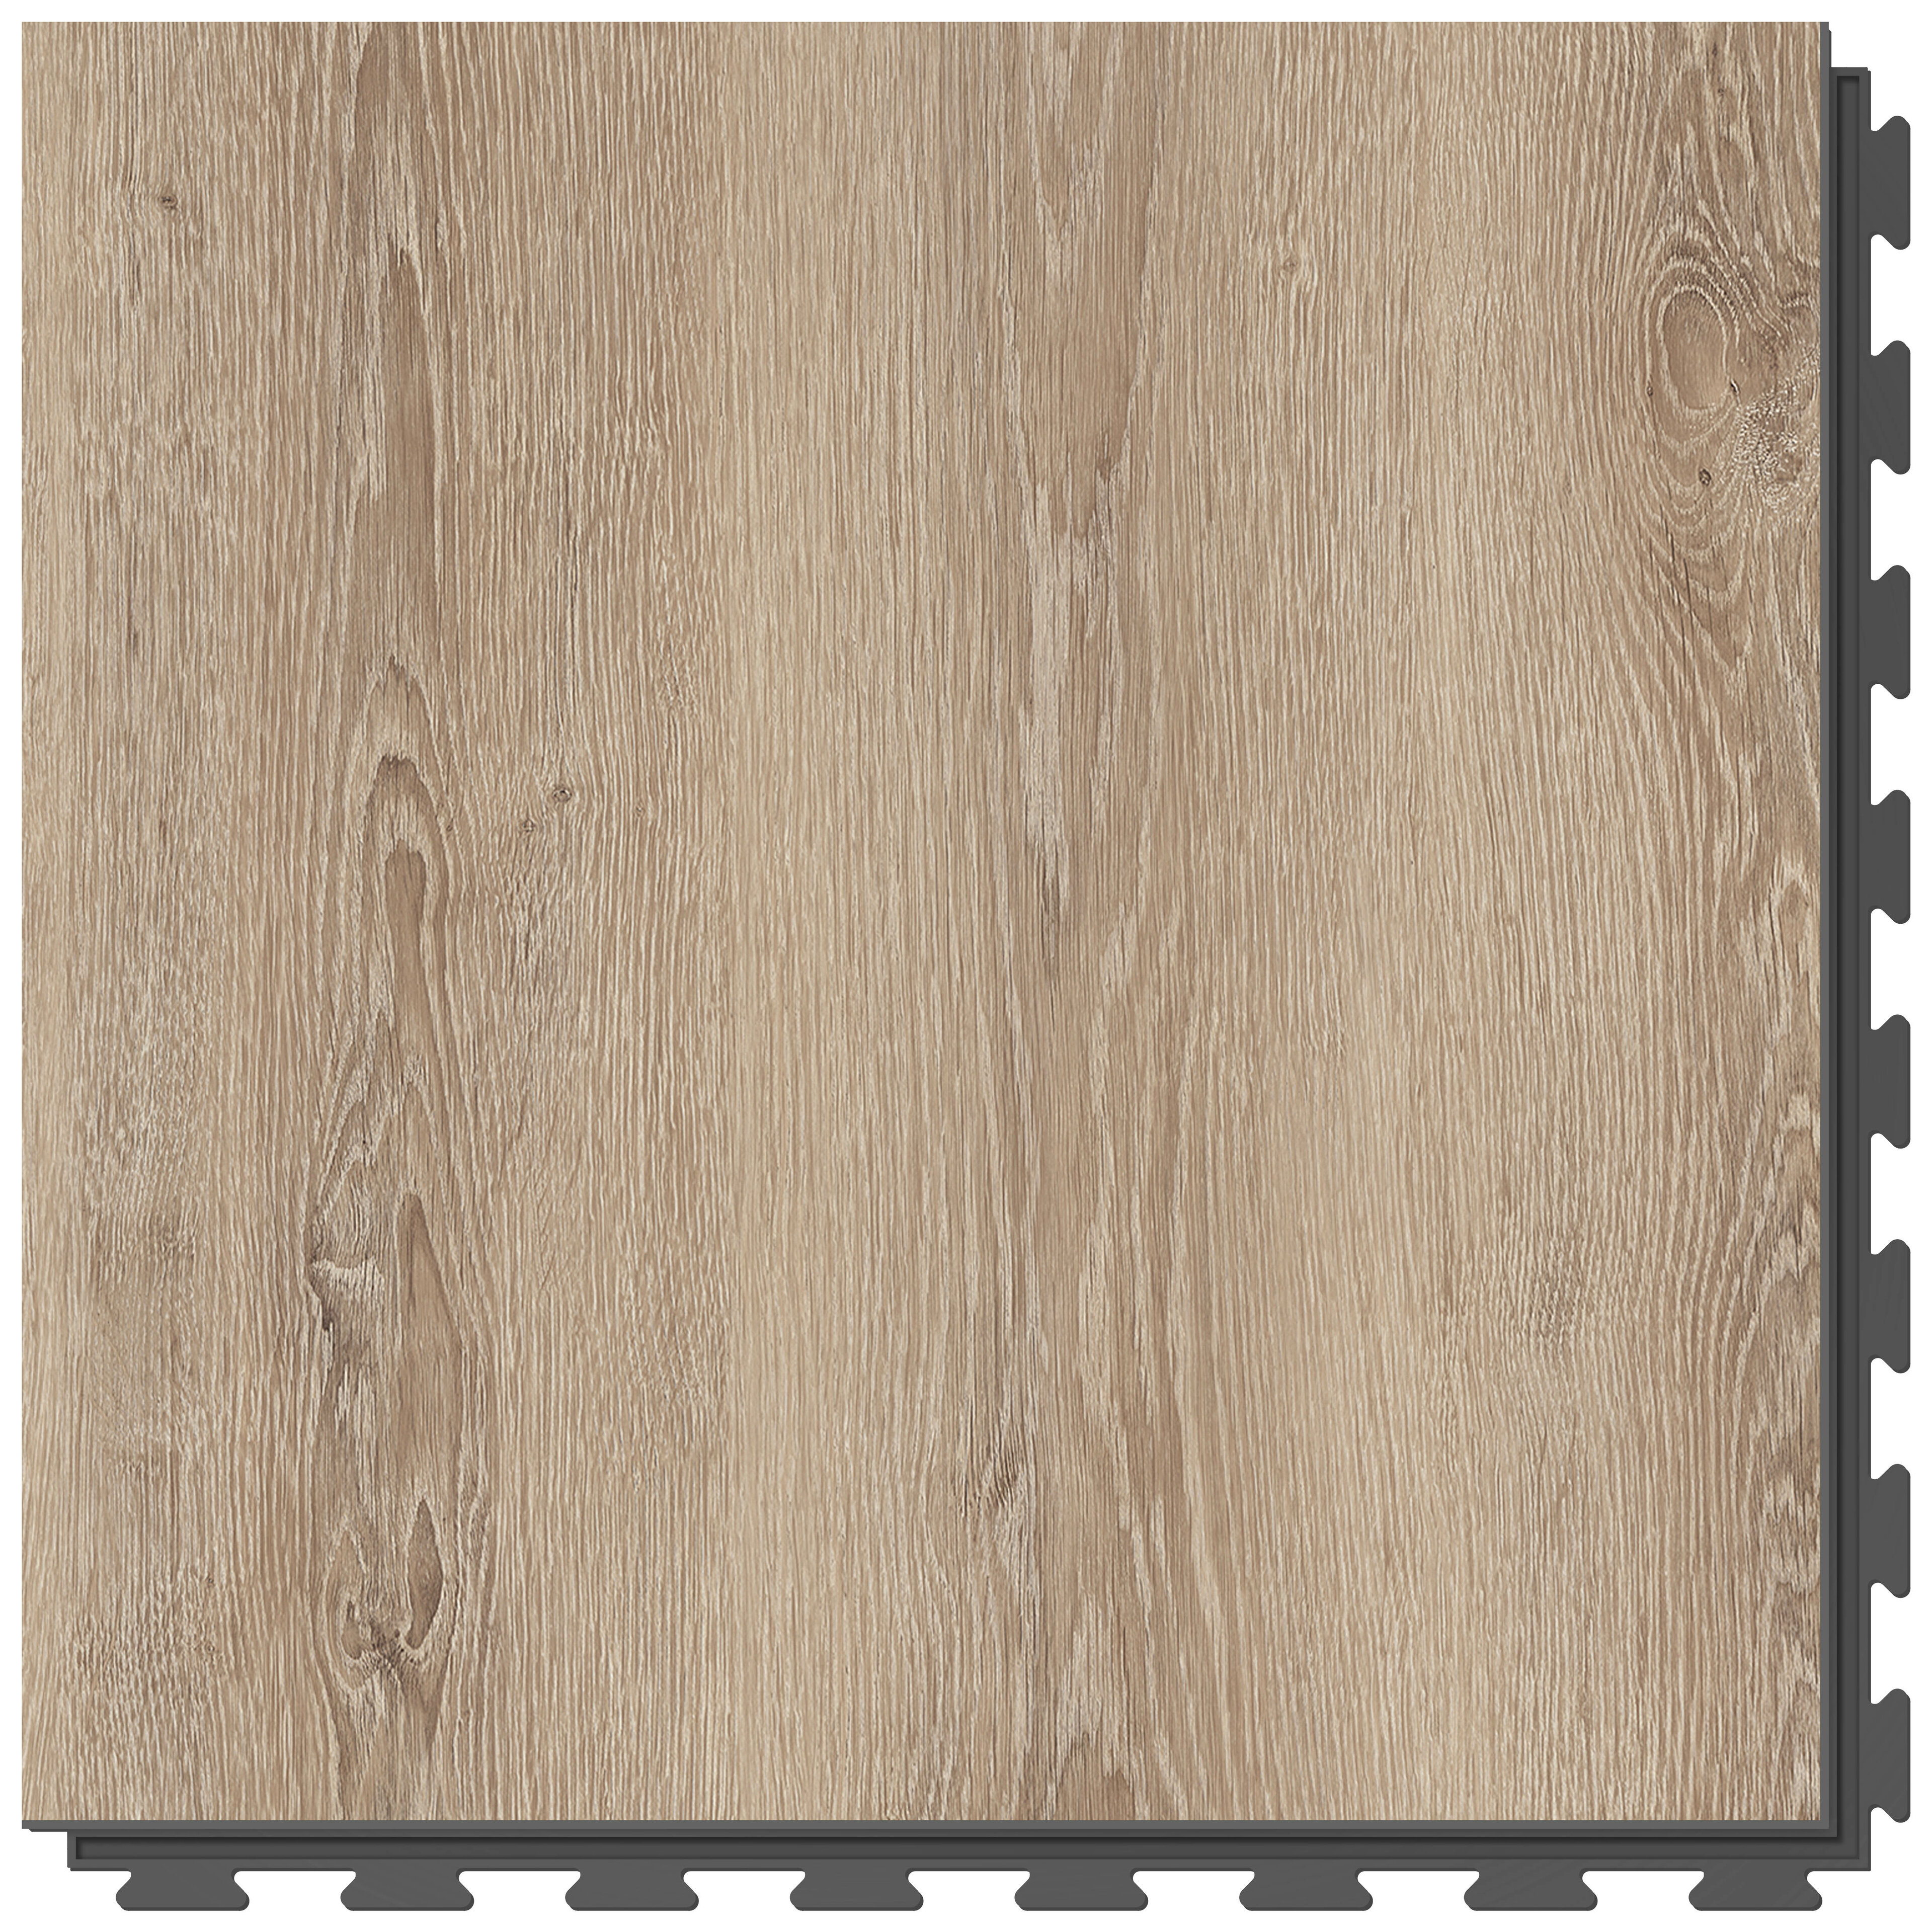 Hnědá PVC vinylová dlažba Fortelock Business Tyrolean oak W001 Graphite - délka 66,8 cm, šířka 66,8 cm, výška 0,7 cm